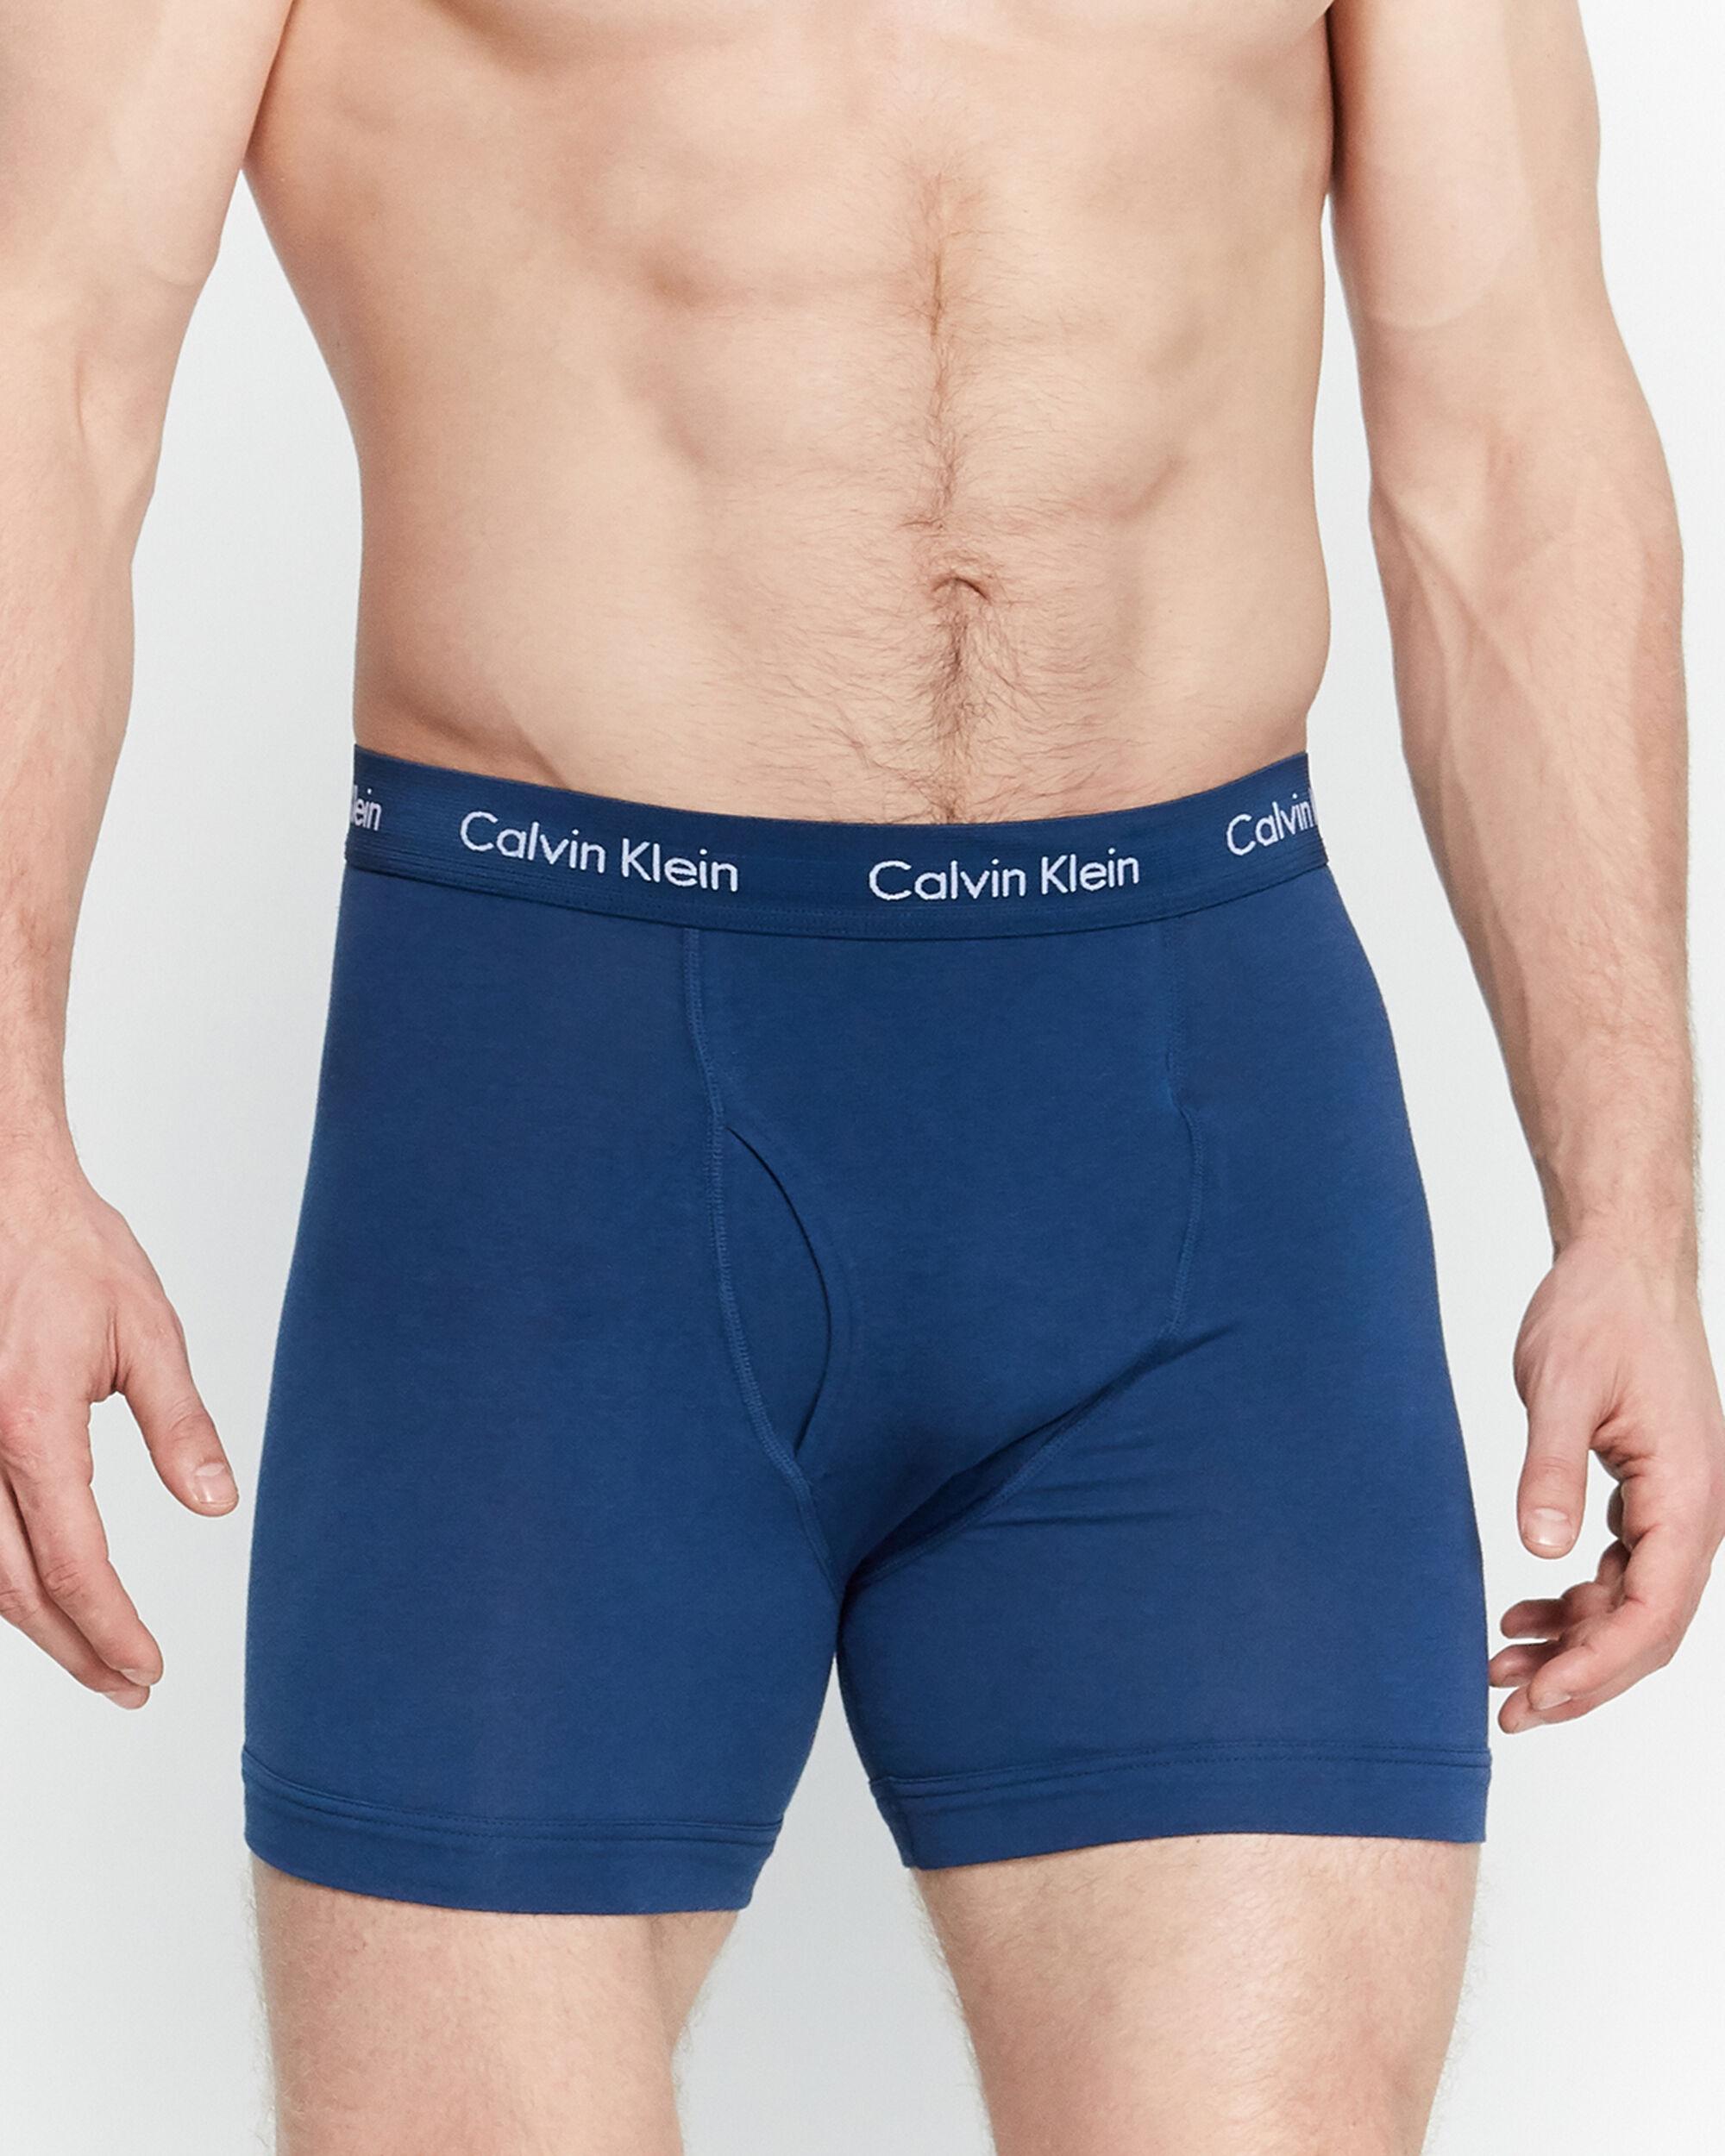 Calvin Klein 3-pack Classic Stretch Boxer Briefs in Blue for Men - Lyst